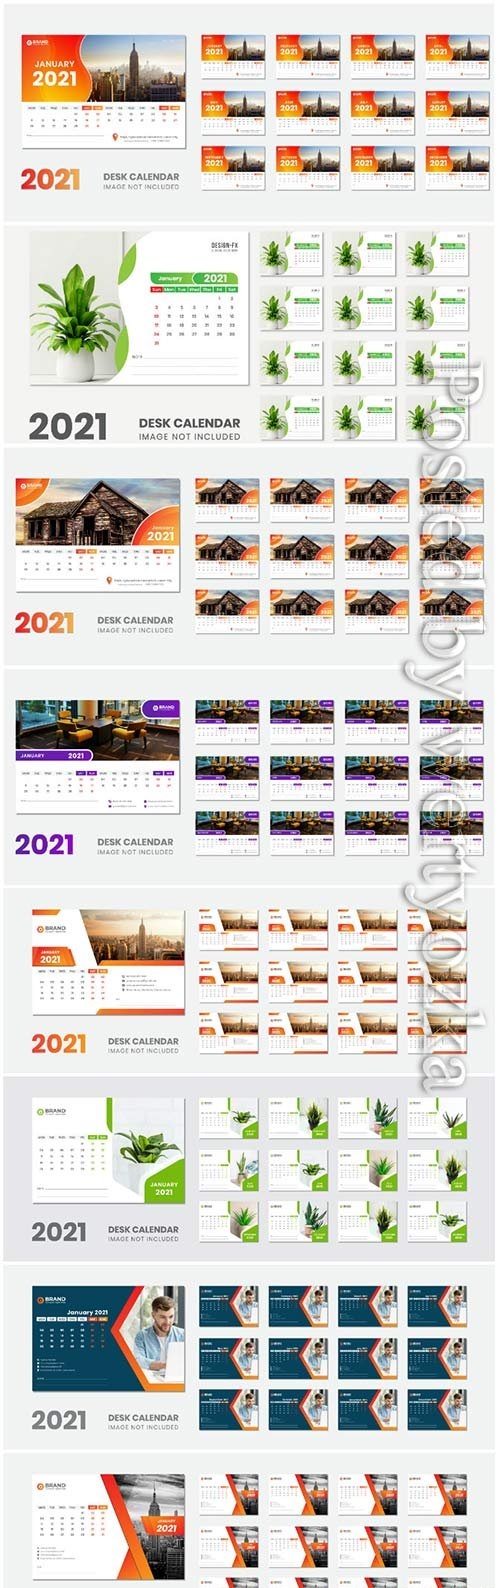 Desk calendar 2021 template design for new year vol 6